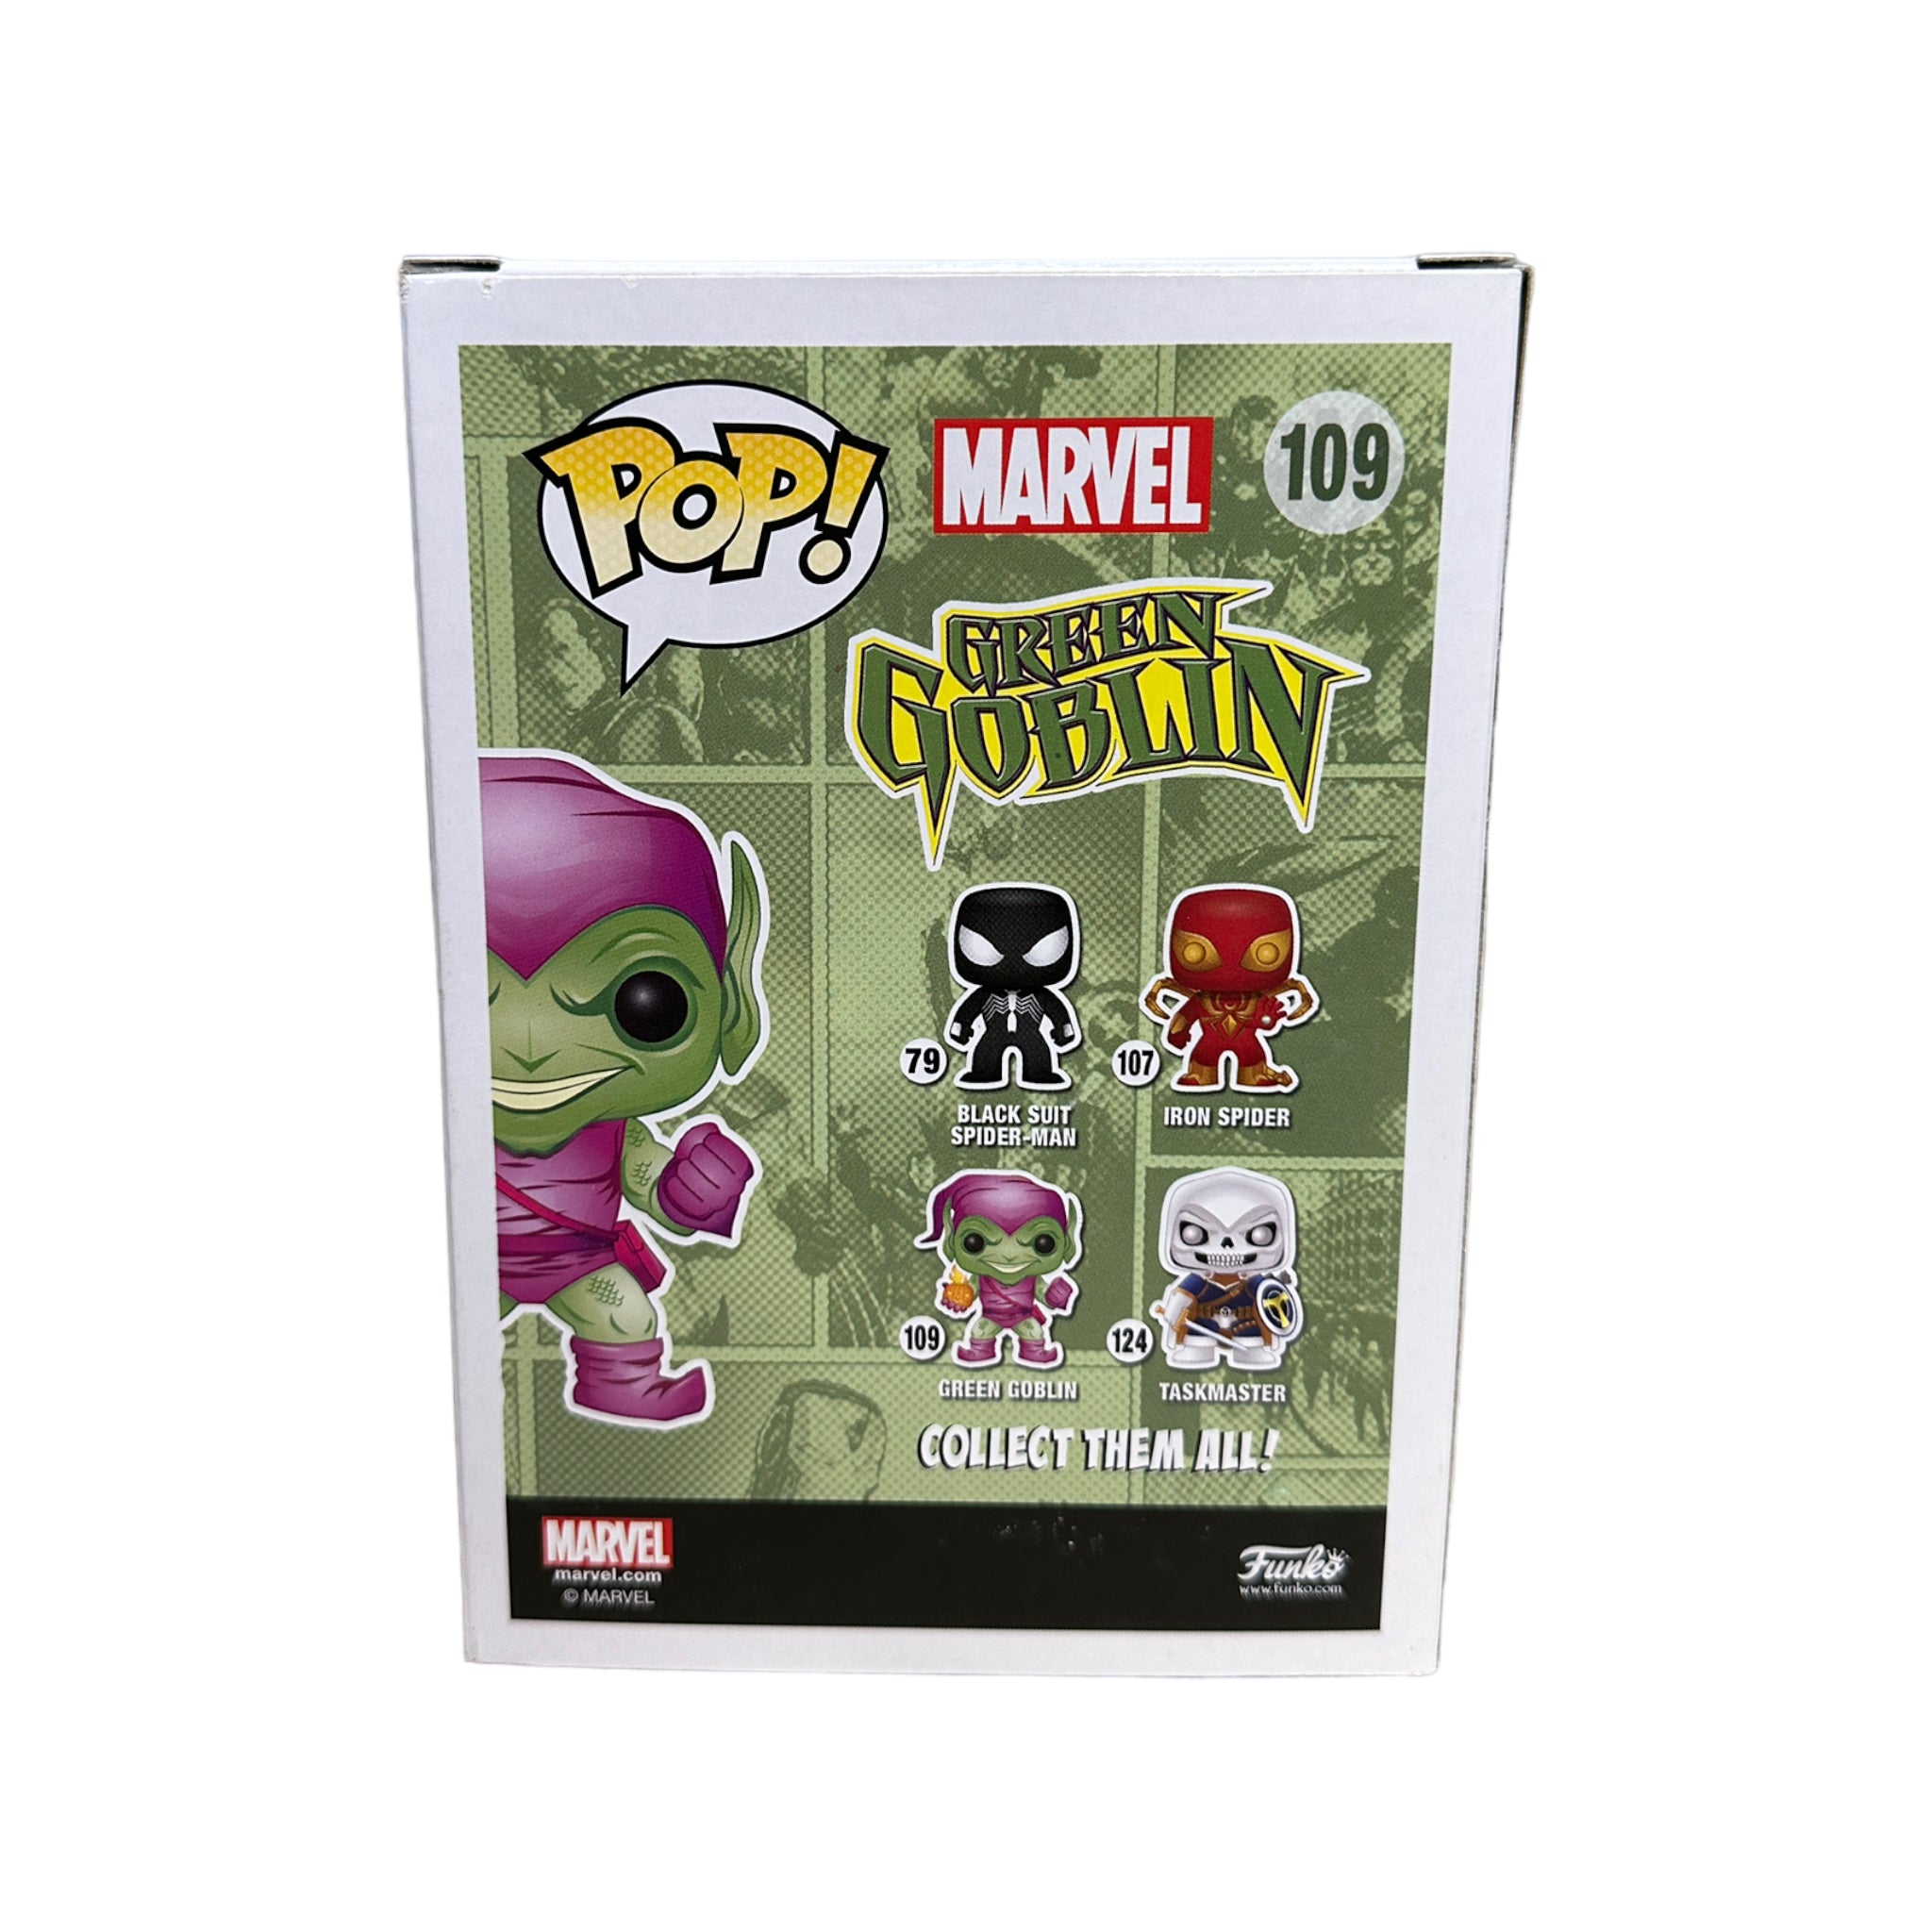 Green Goblin #109 (Glows in the Dark) Funko Pop! - Marvel - ECCC 2016 Exclusive LE300 Pcs - Condition 7/10